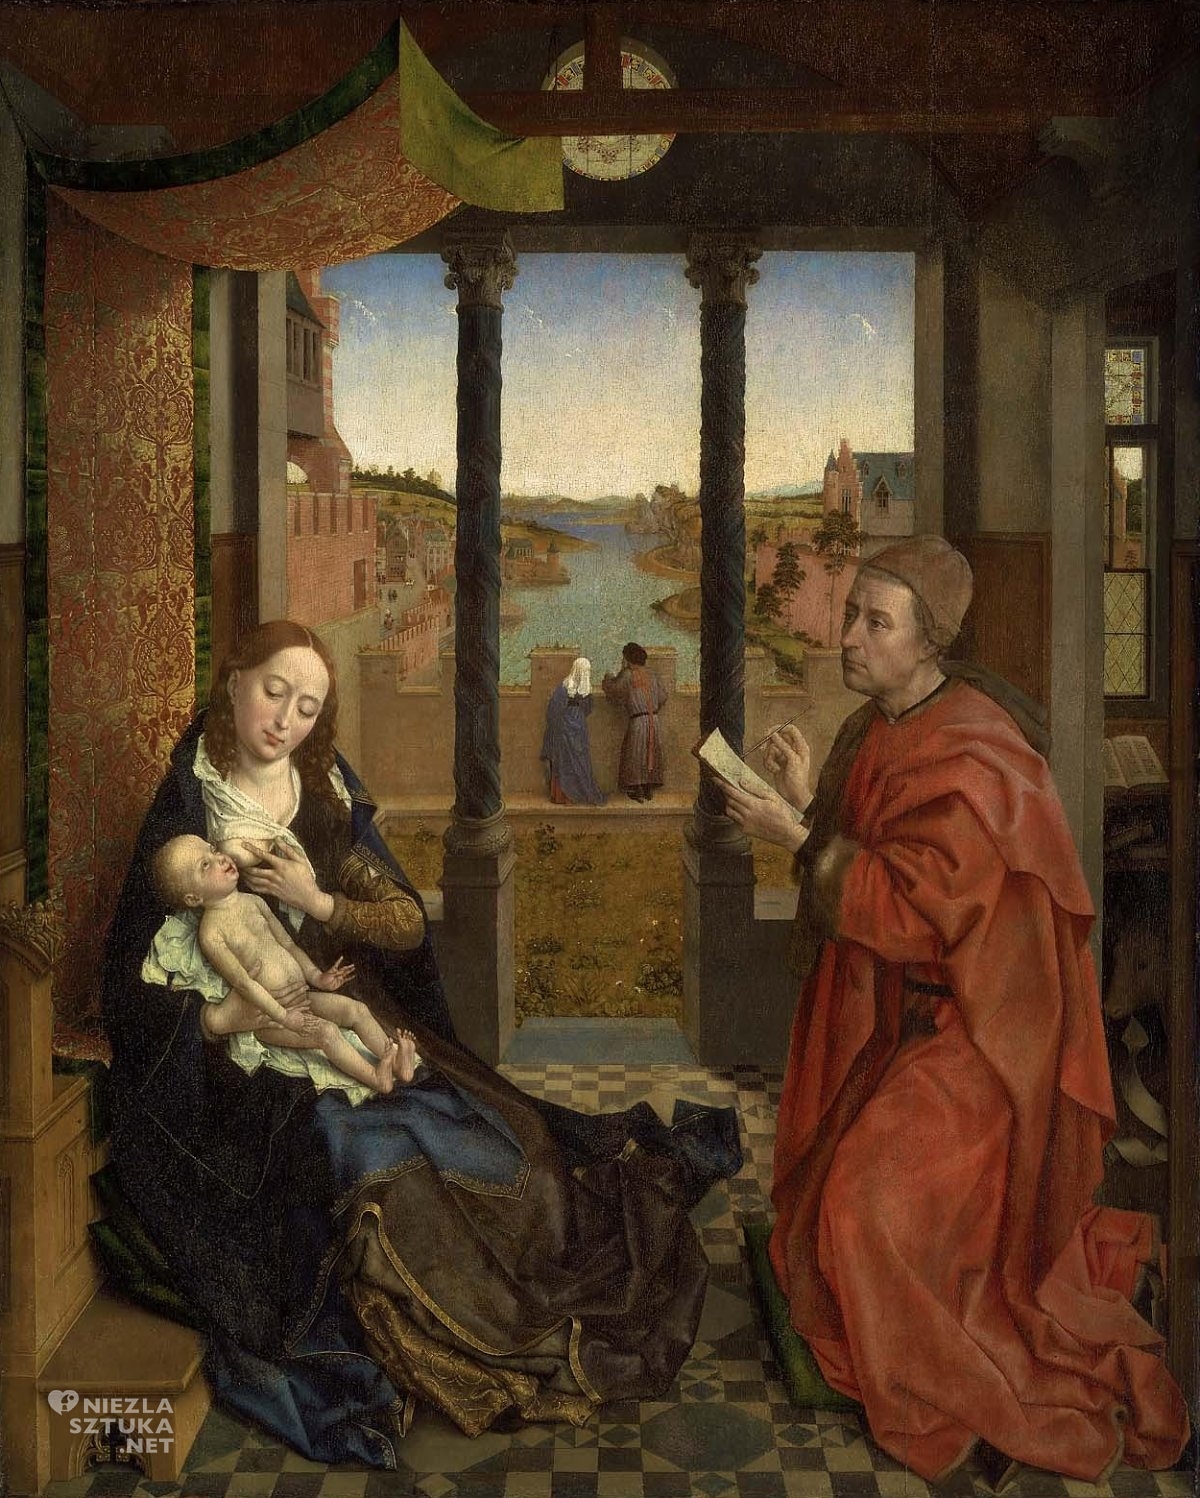 Rogier, van der Weyden, Św. Łukasz malujący Madonnę, renesans, malarstwo niderlandzkie, Niezła Sztuka